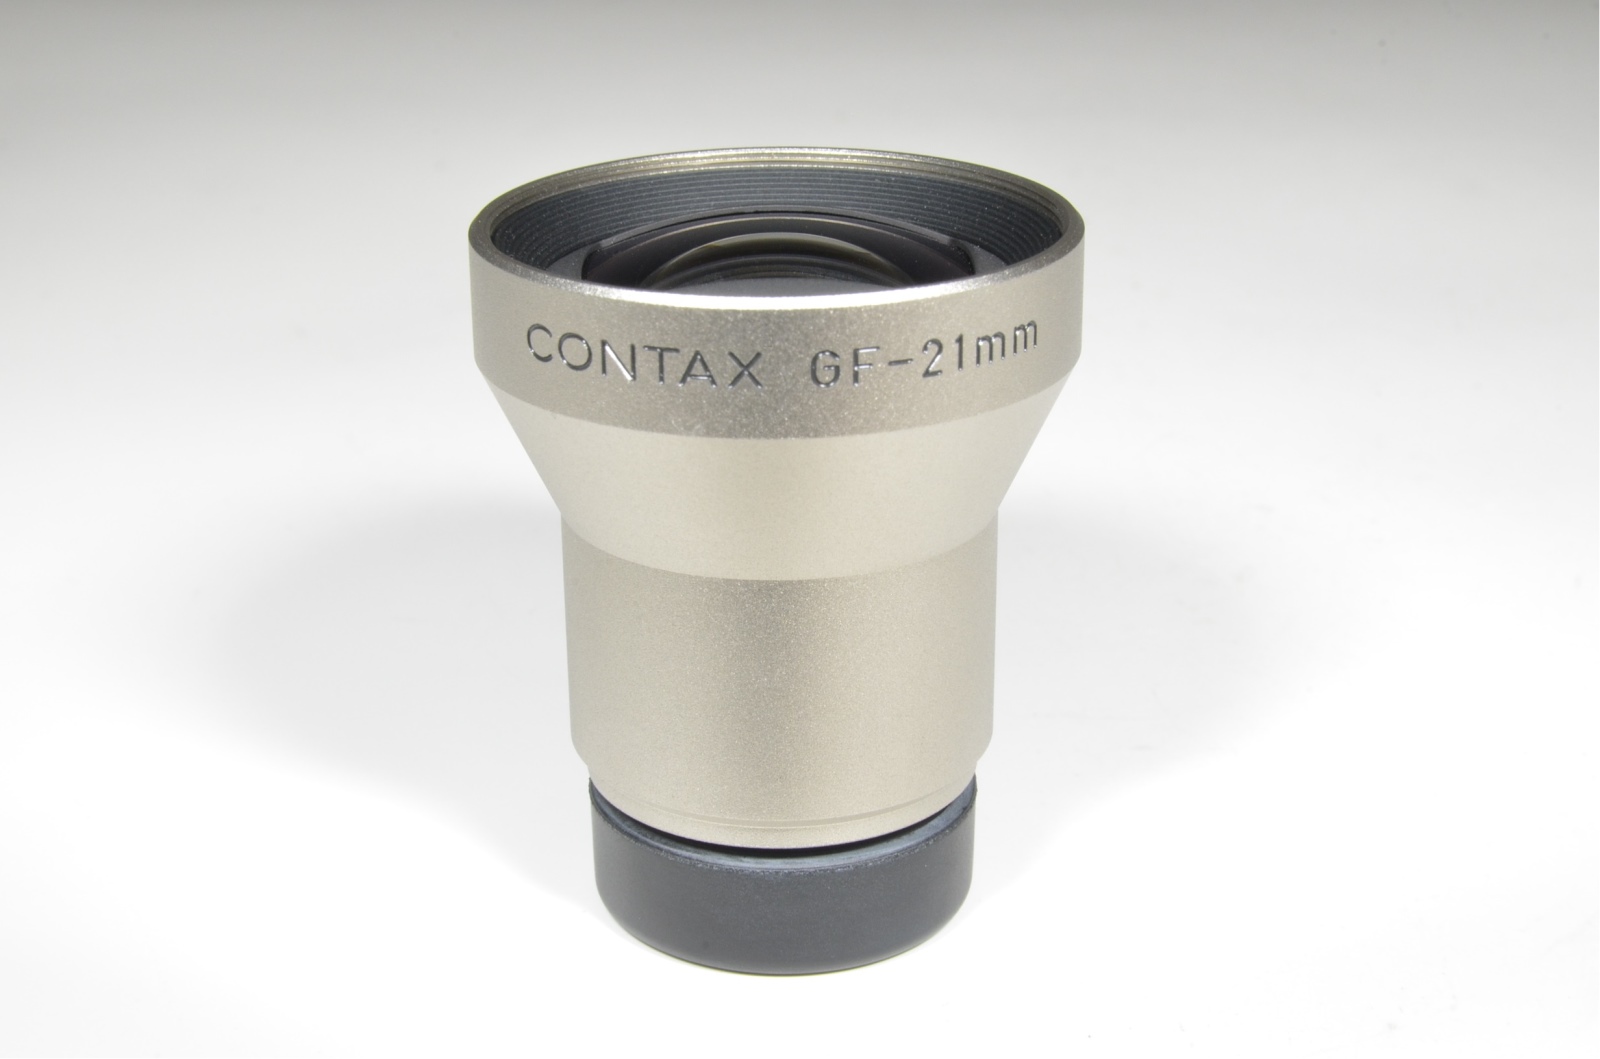 contax carl zeiss t* biogon 21mm f2.8